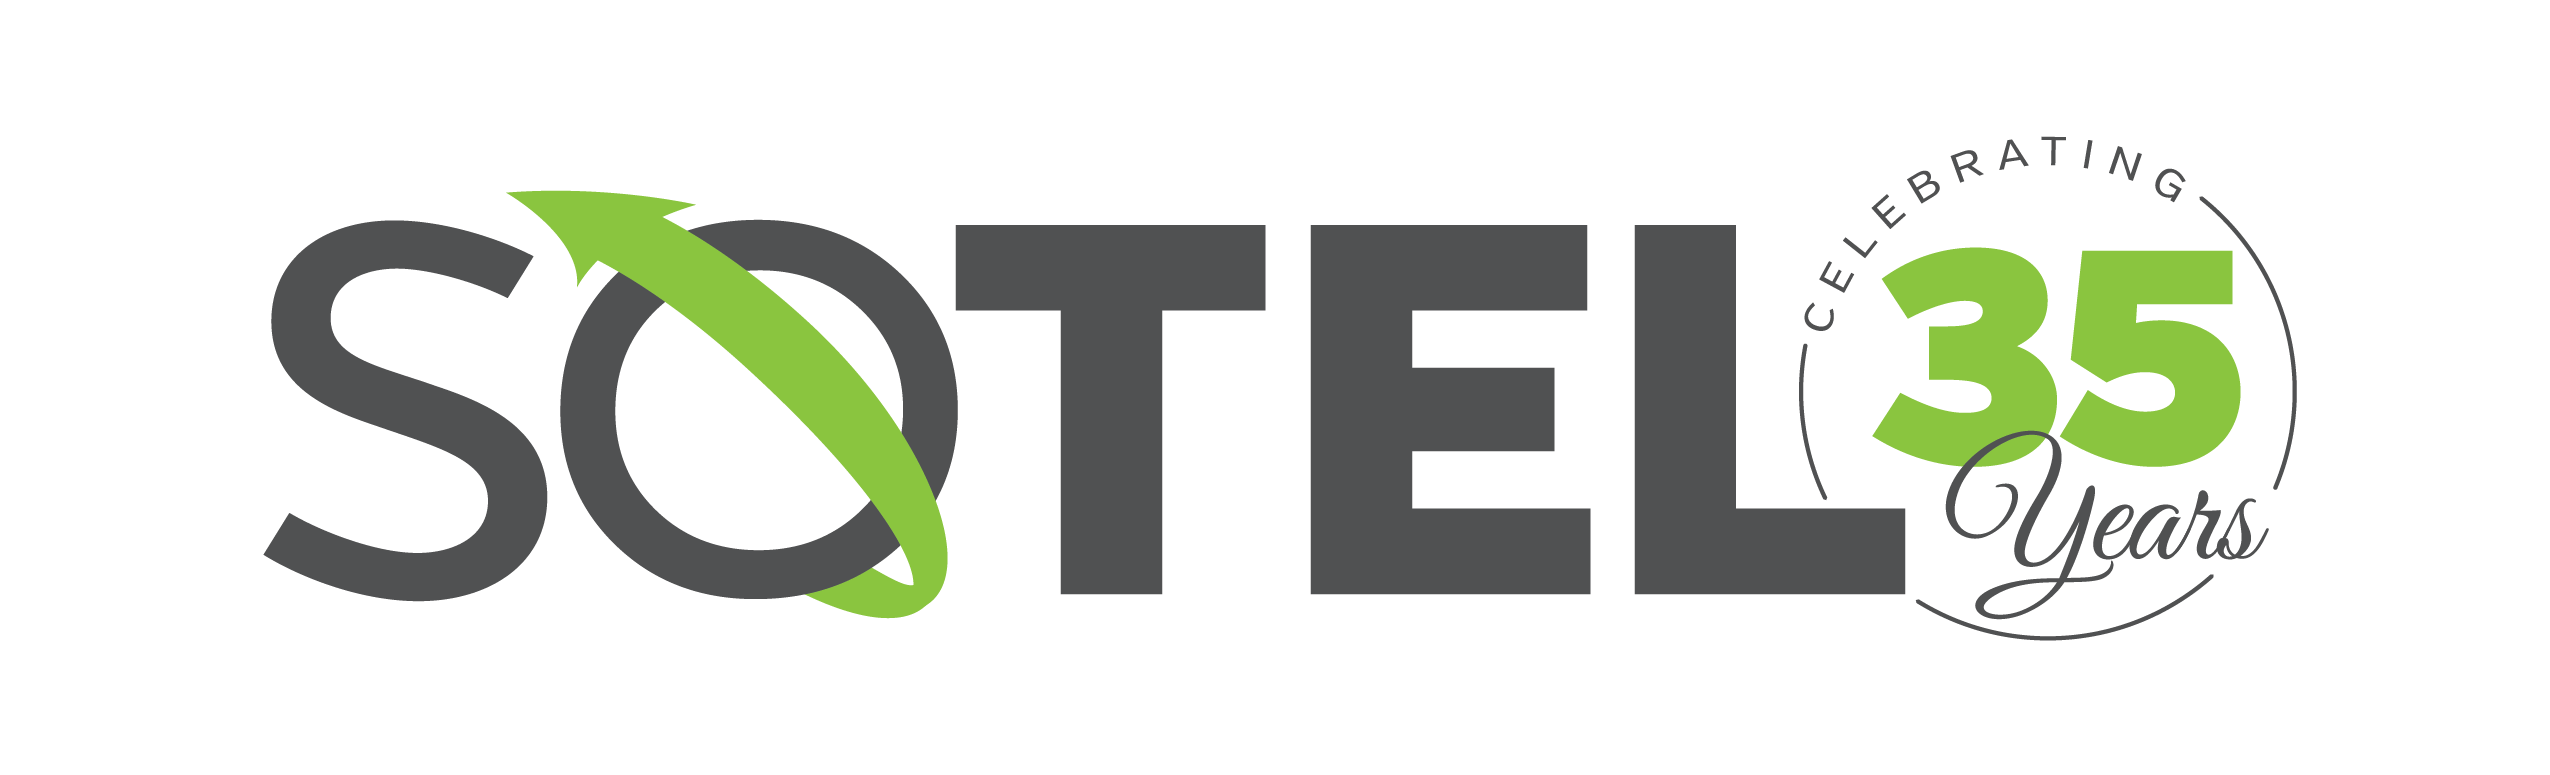 SoTel Logo.png